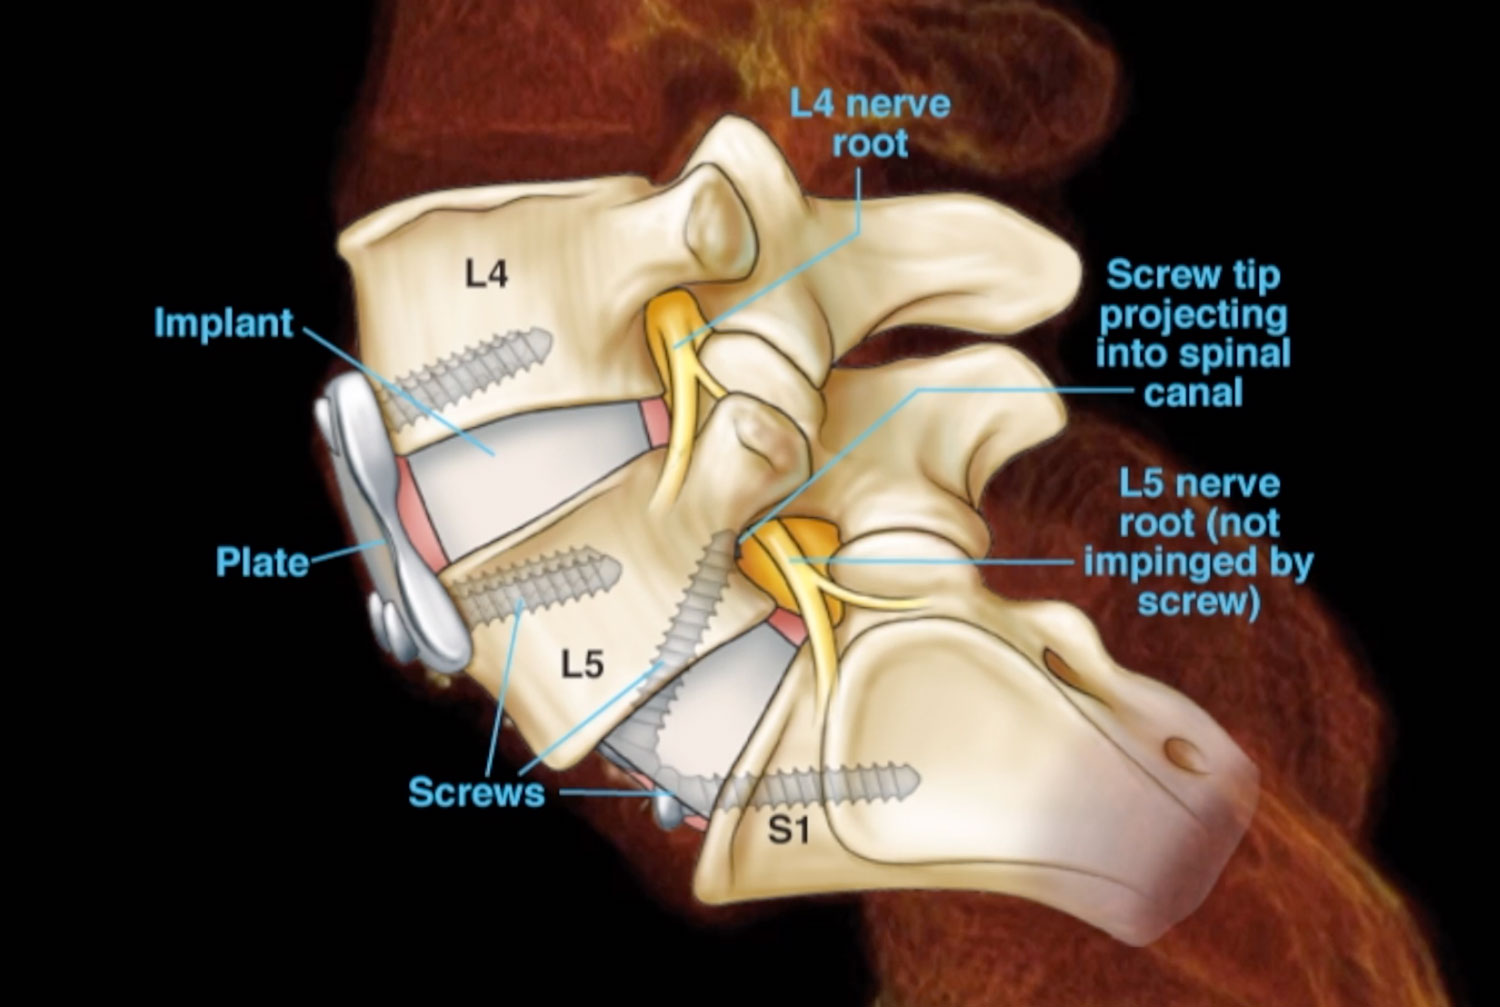 Illustration overlay on spine radiology film